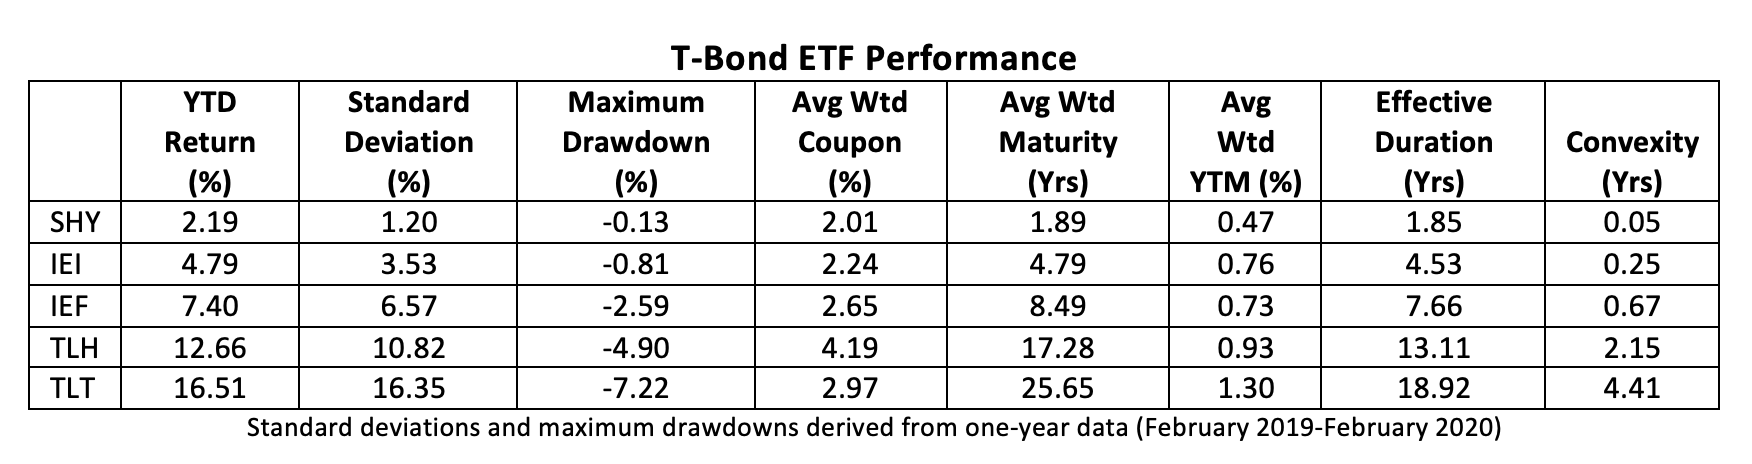 T-bond ETF performance